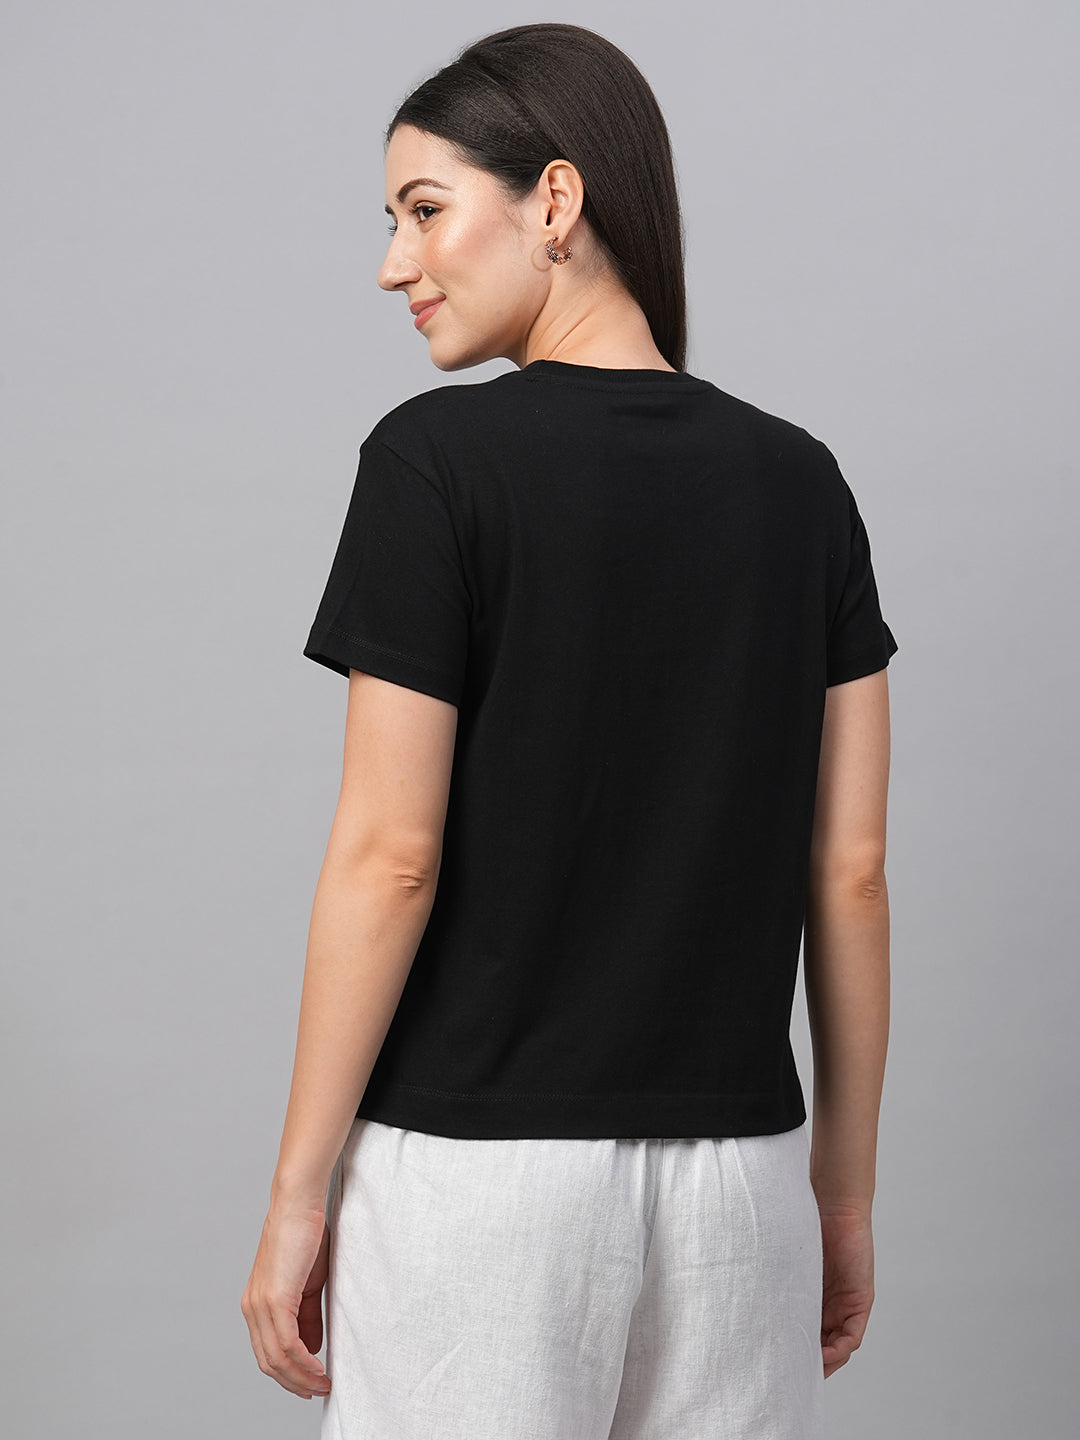 Women's Black Cotton Regular Fit Tshirts